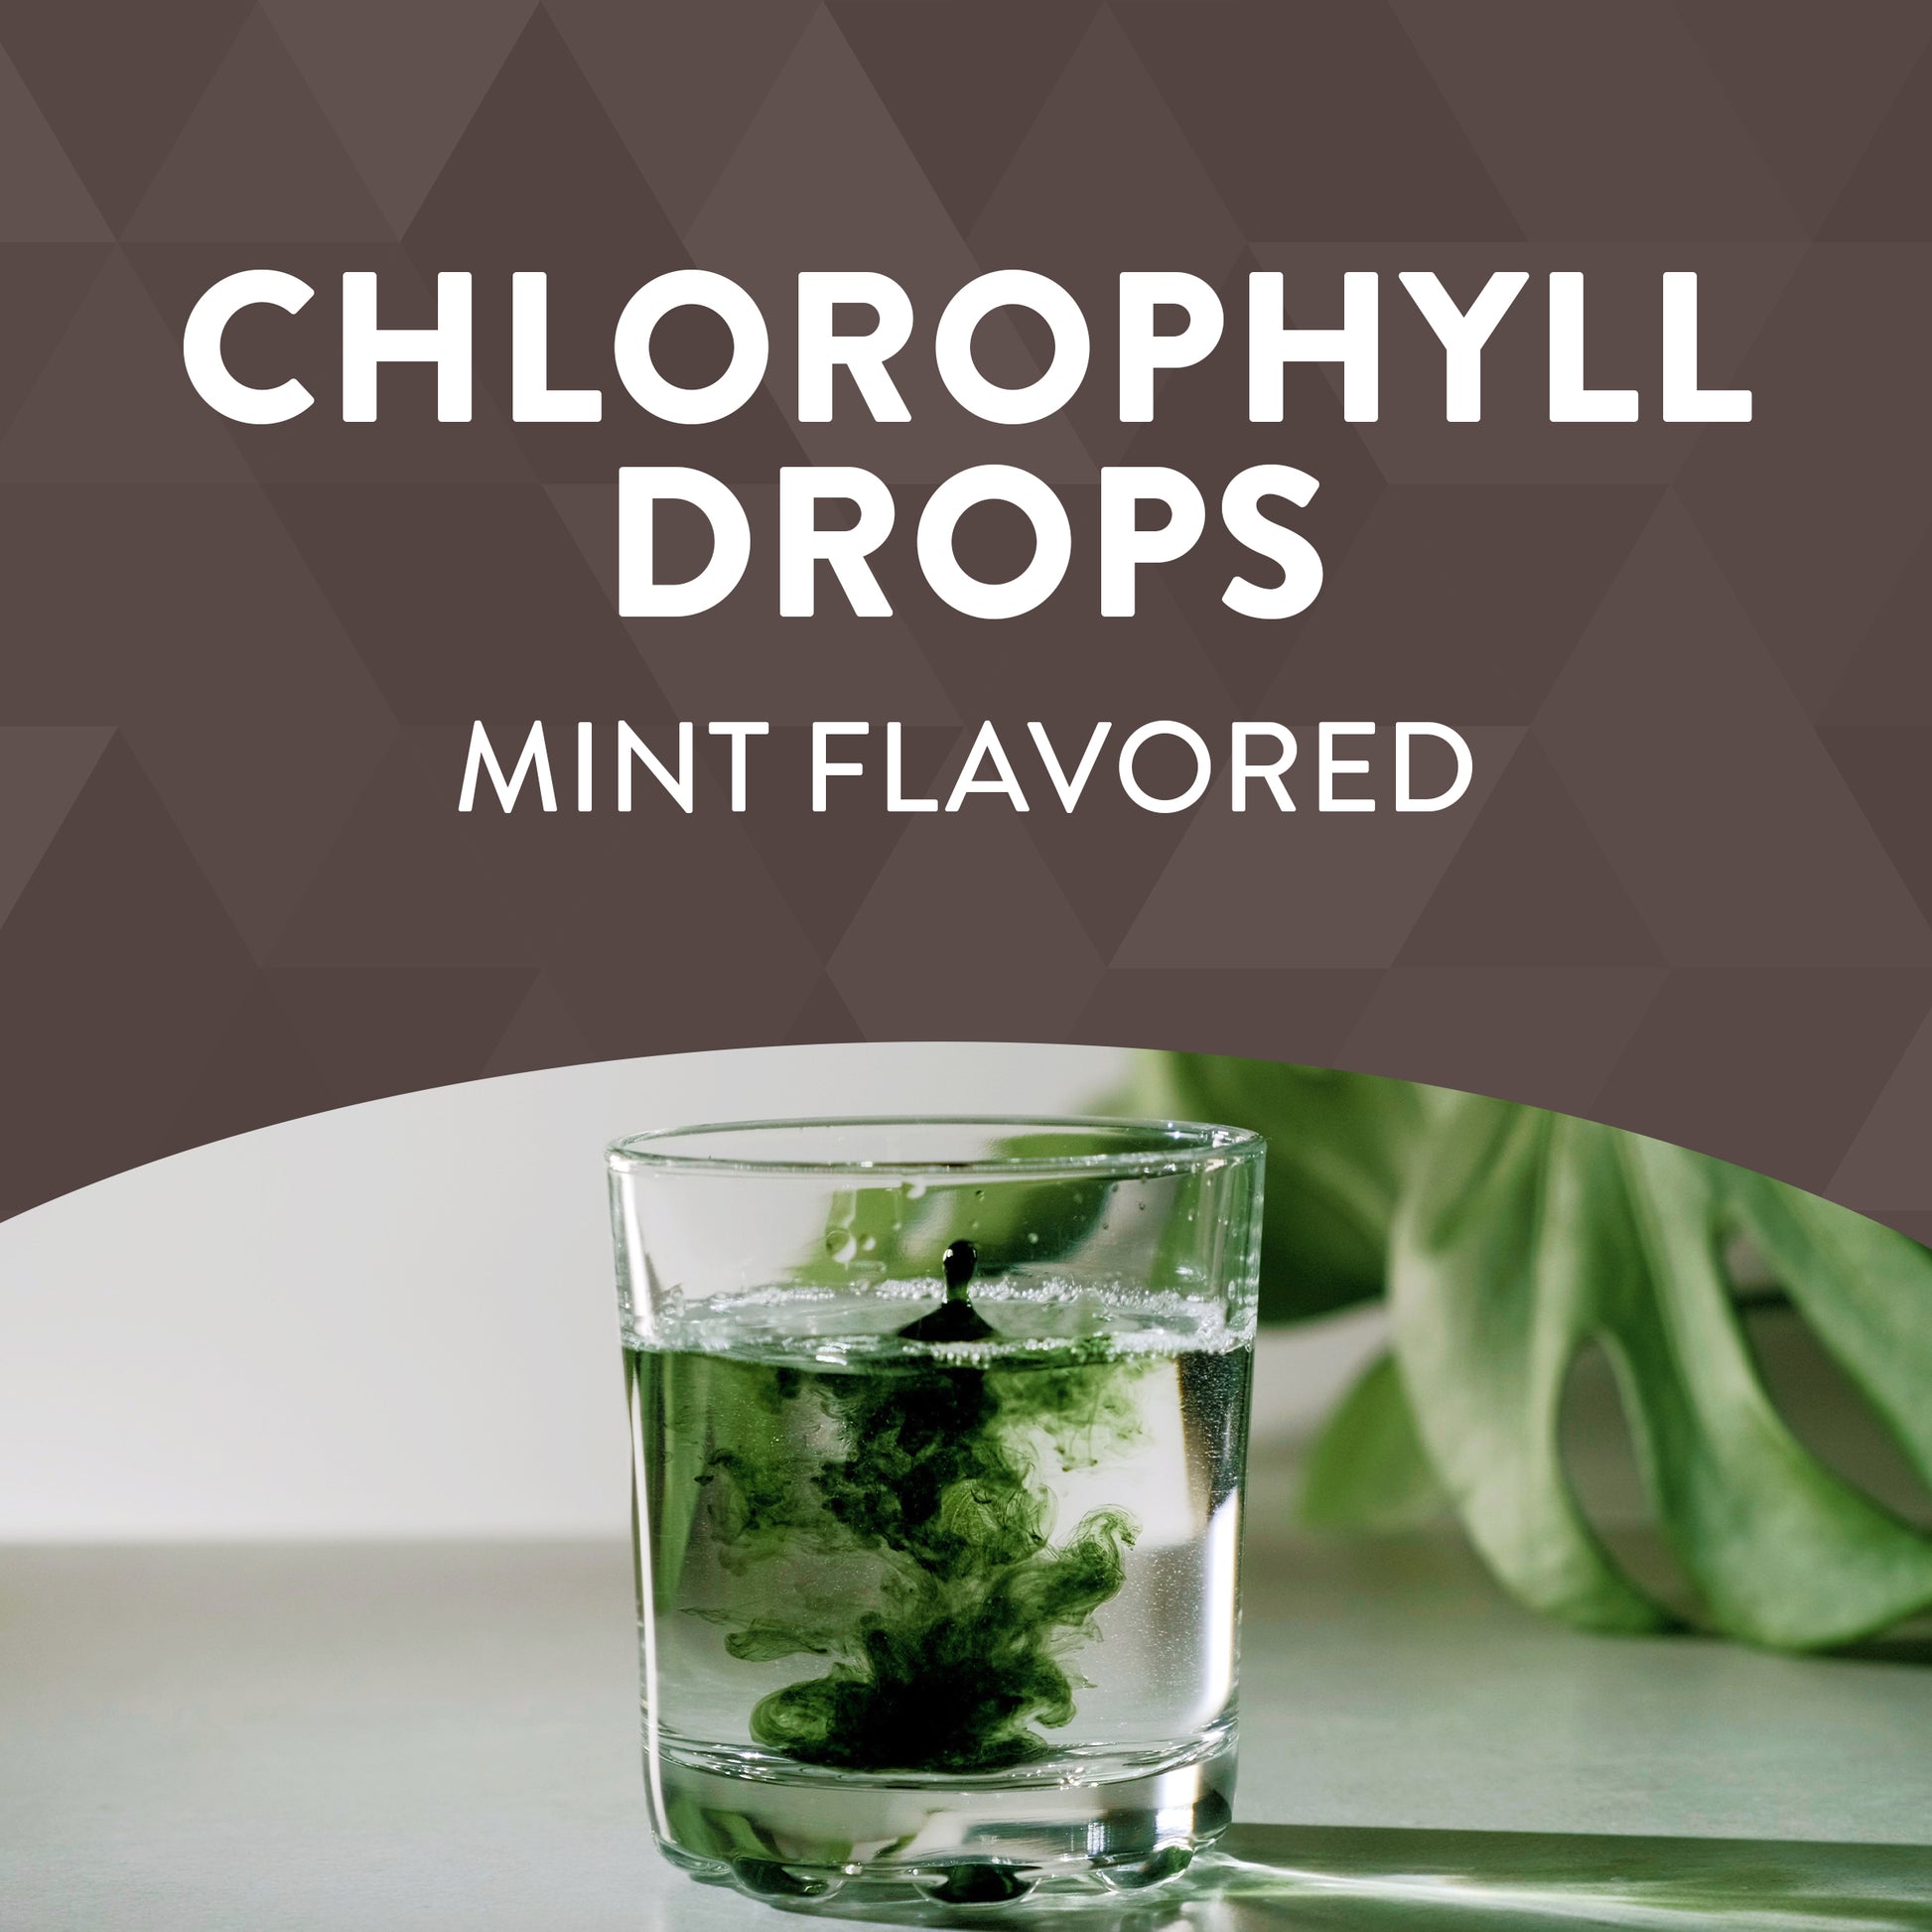 Nature's Way® | Chlorofresh (Mint) 40X Drops